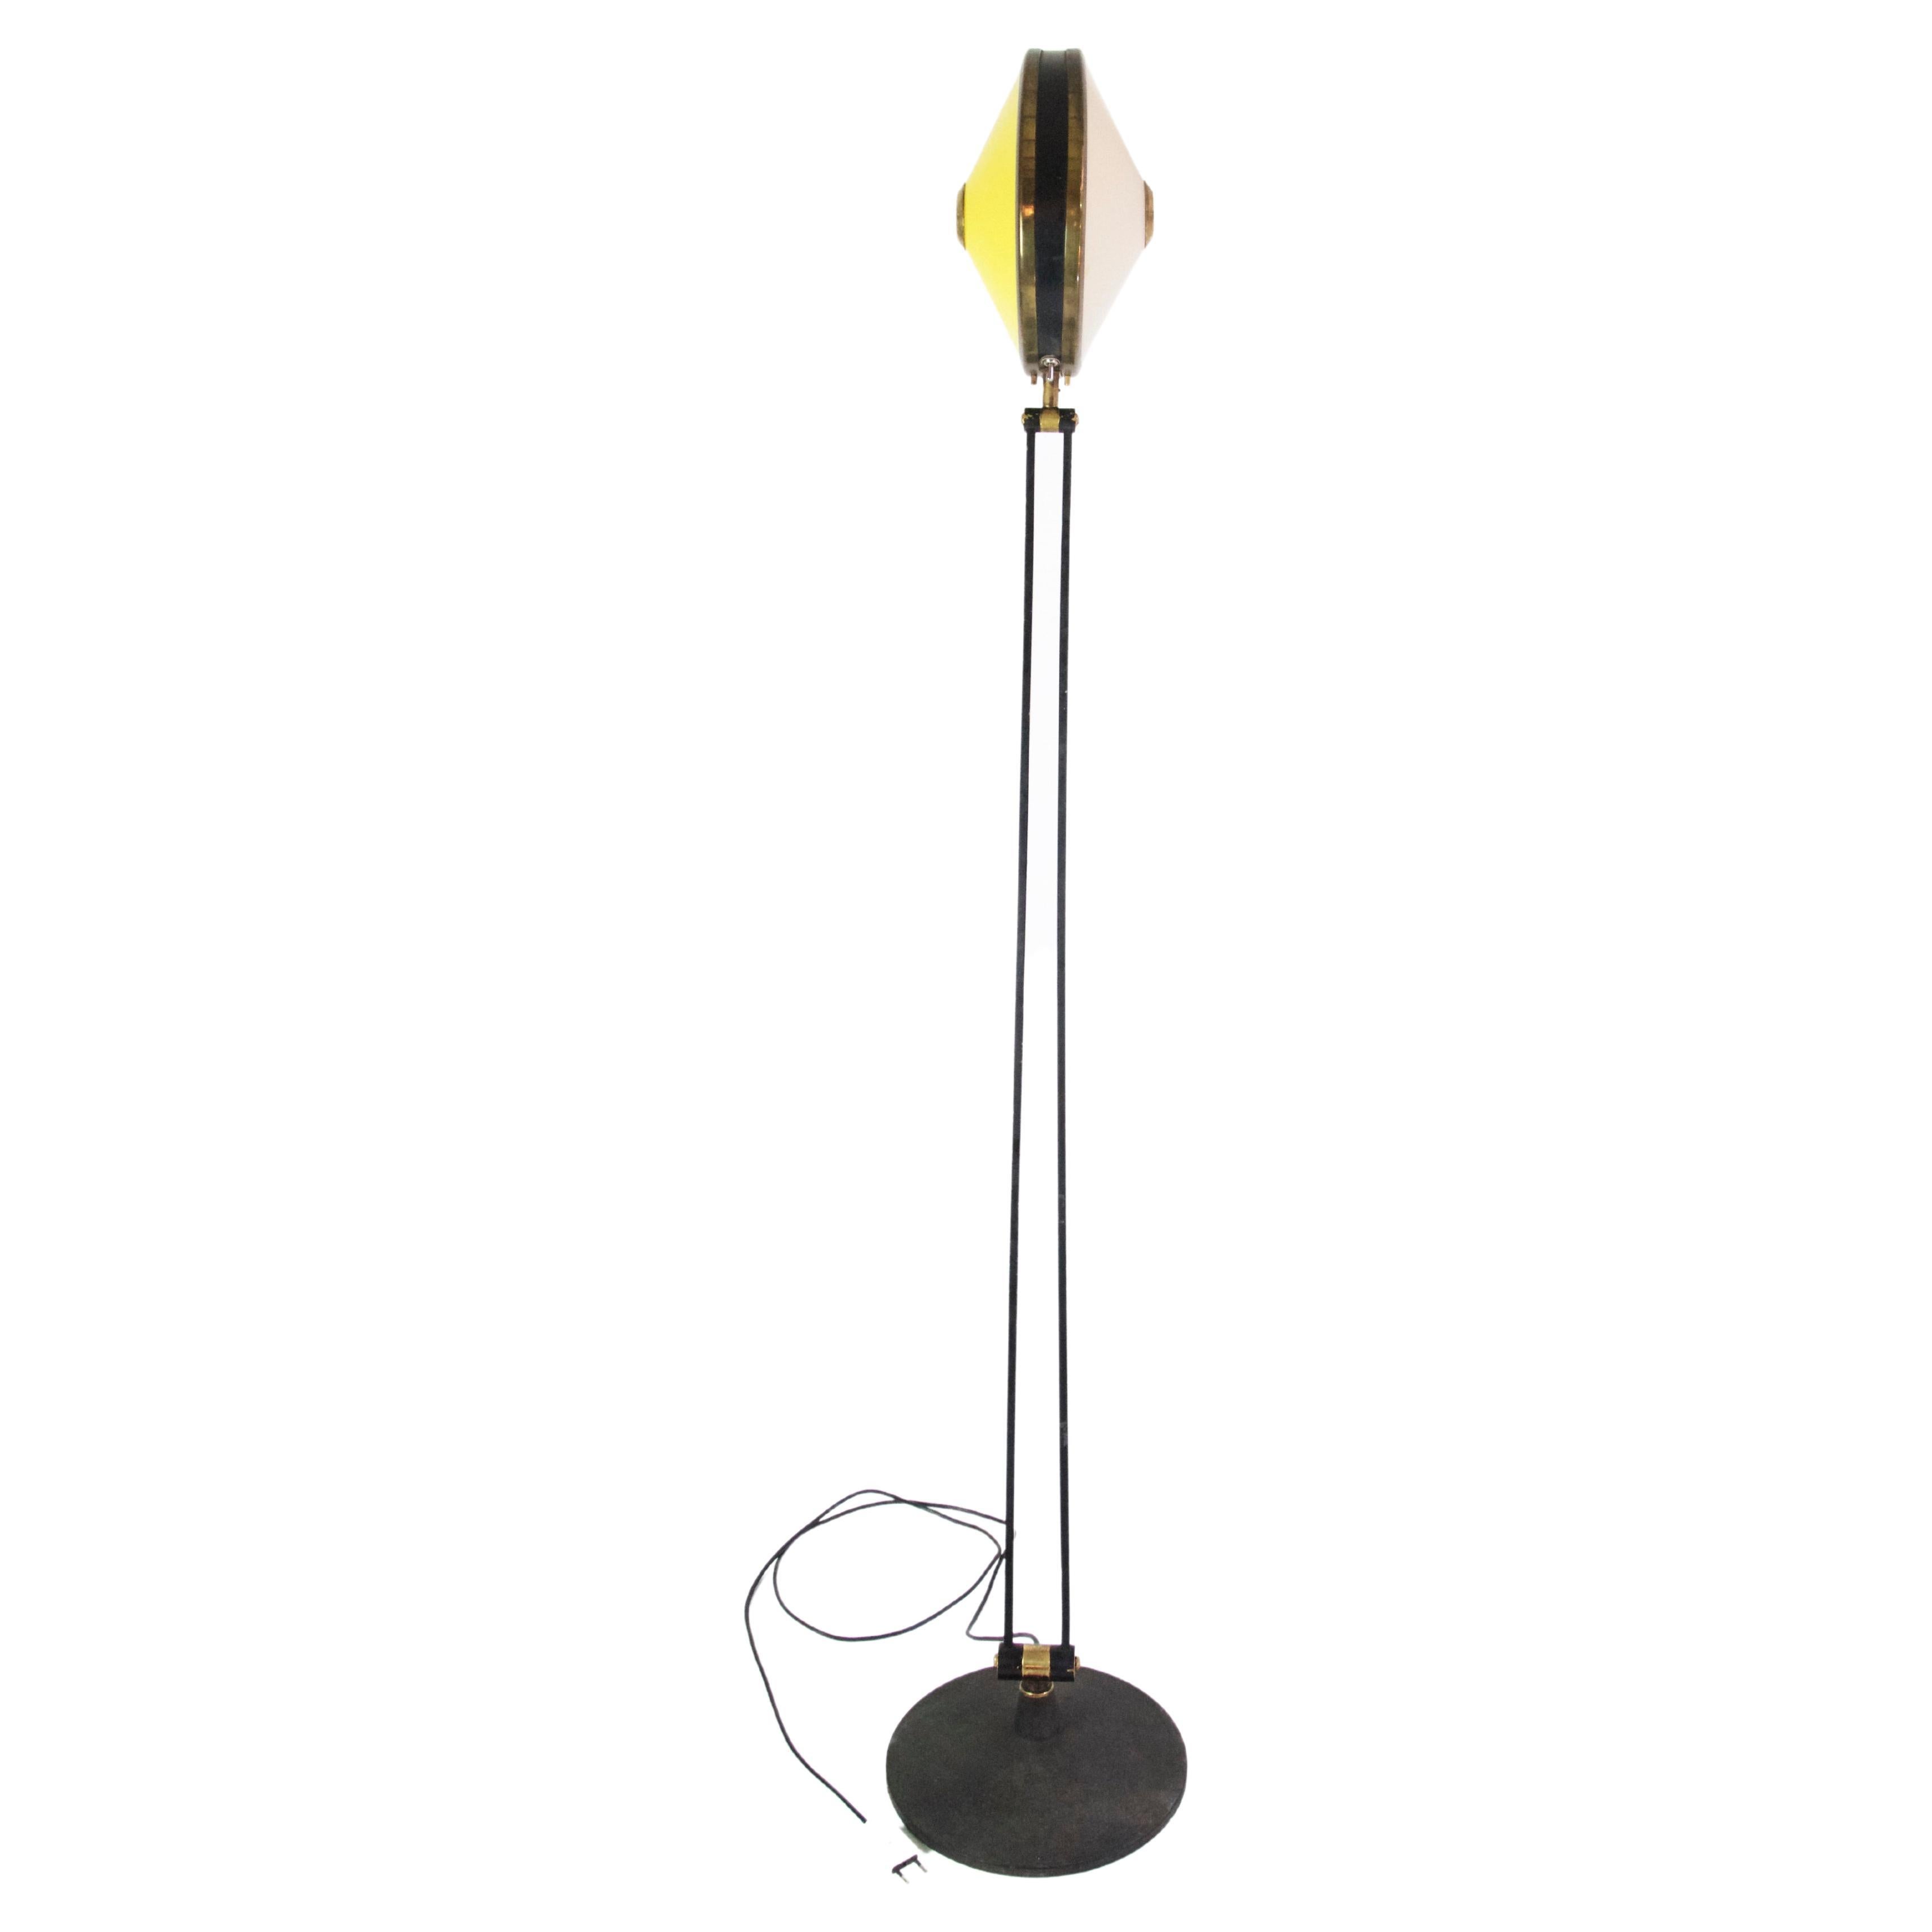 Midcentury Stilnovo Adjustable Standard Lamp Model 4067